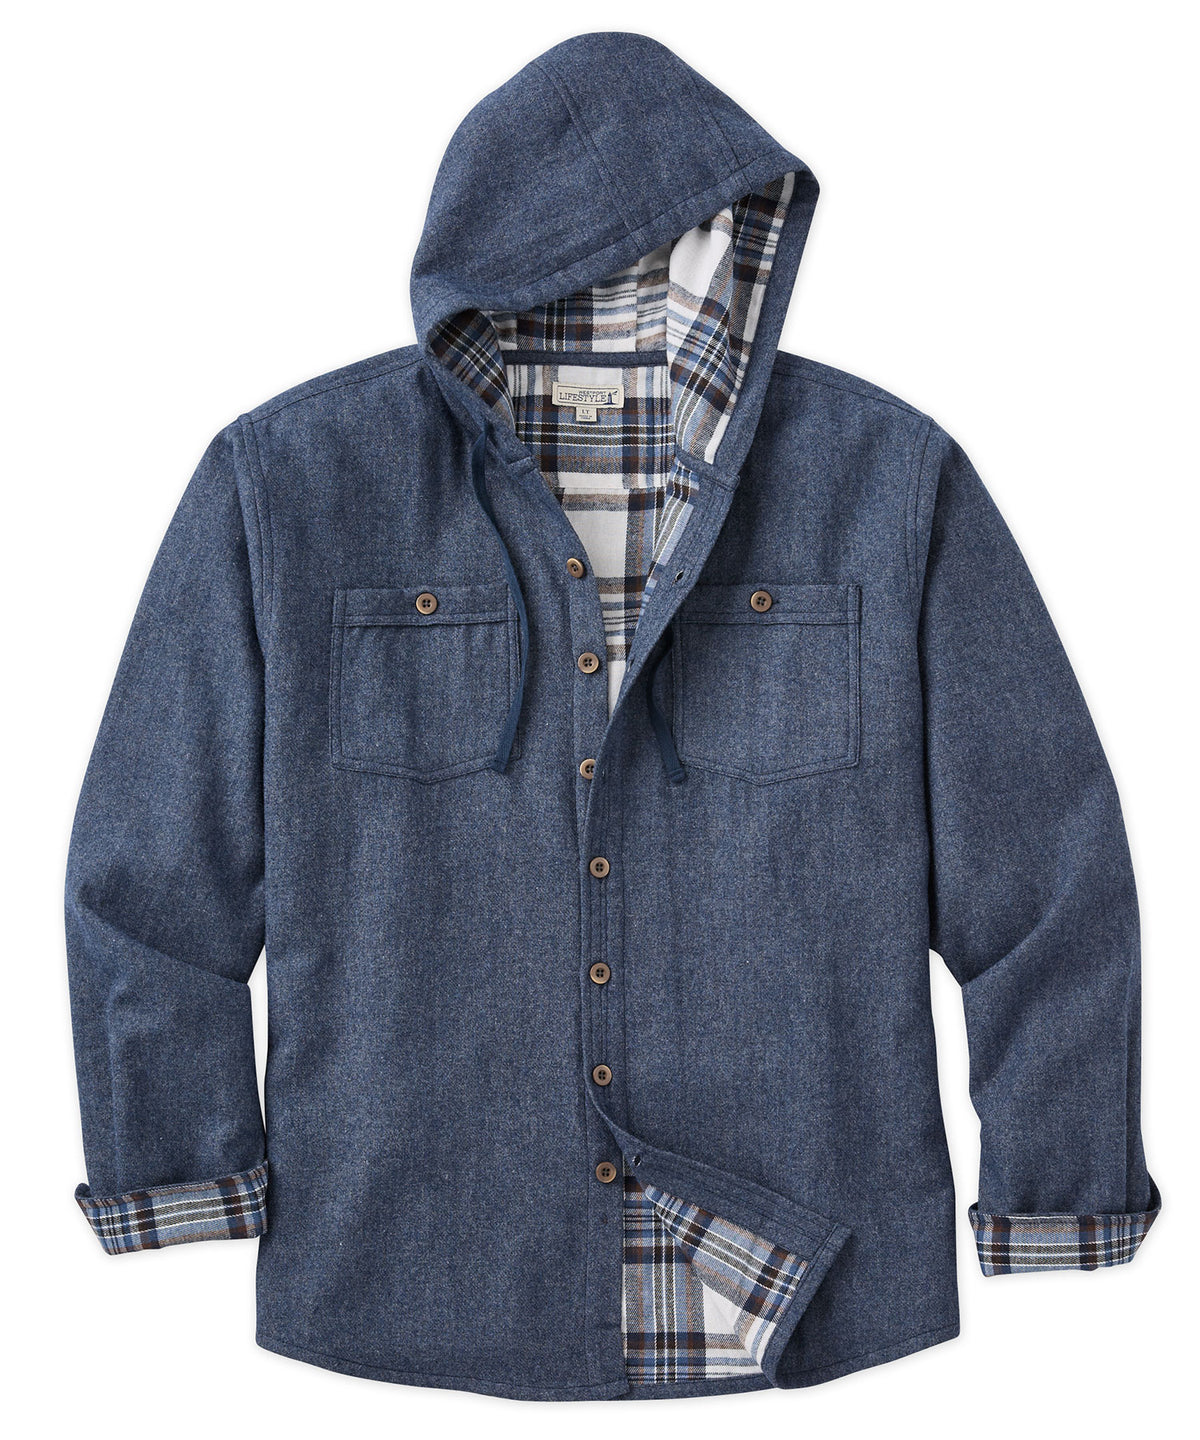 Men's Westport Lifestyle Firepit Flannel Hoodie Shirt Jacket - Grey - Size 4X